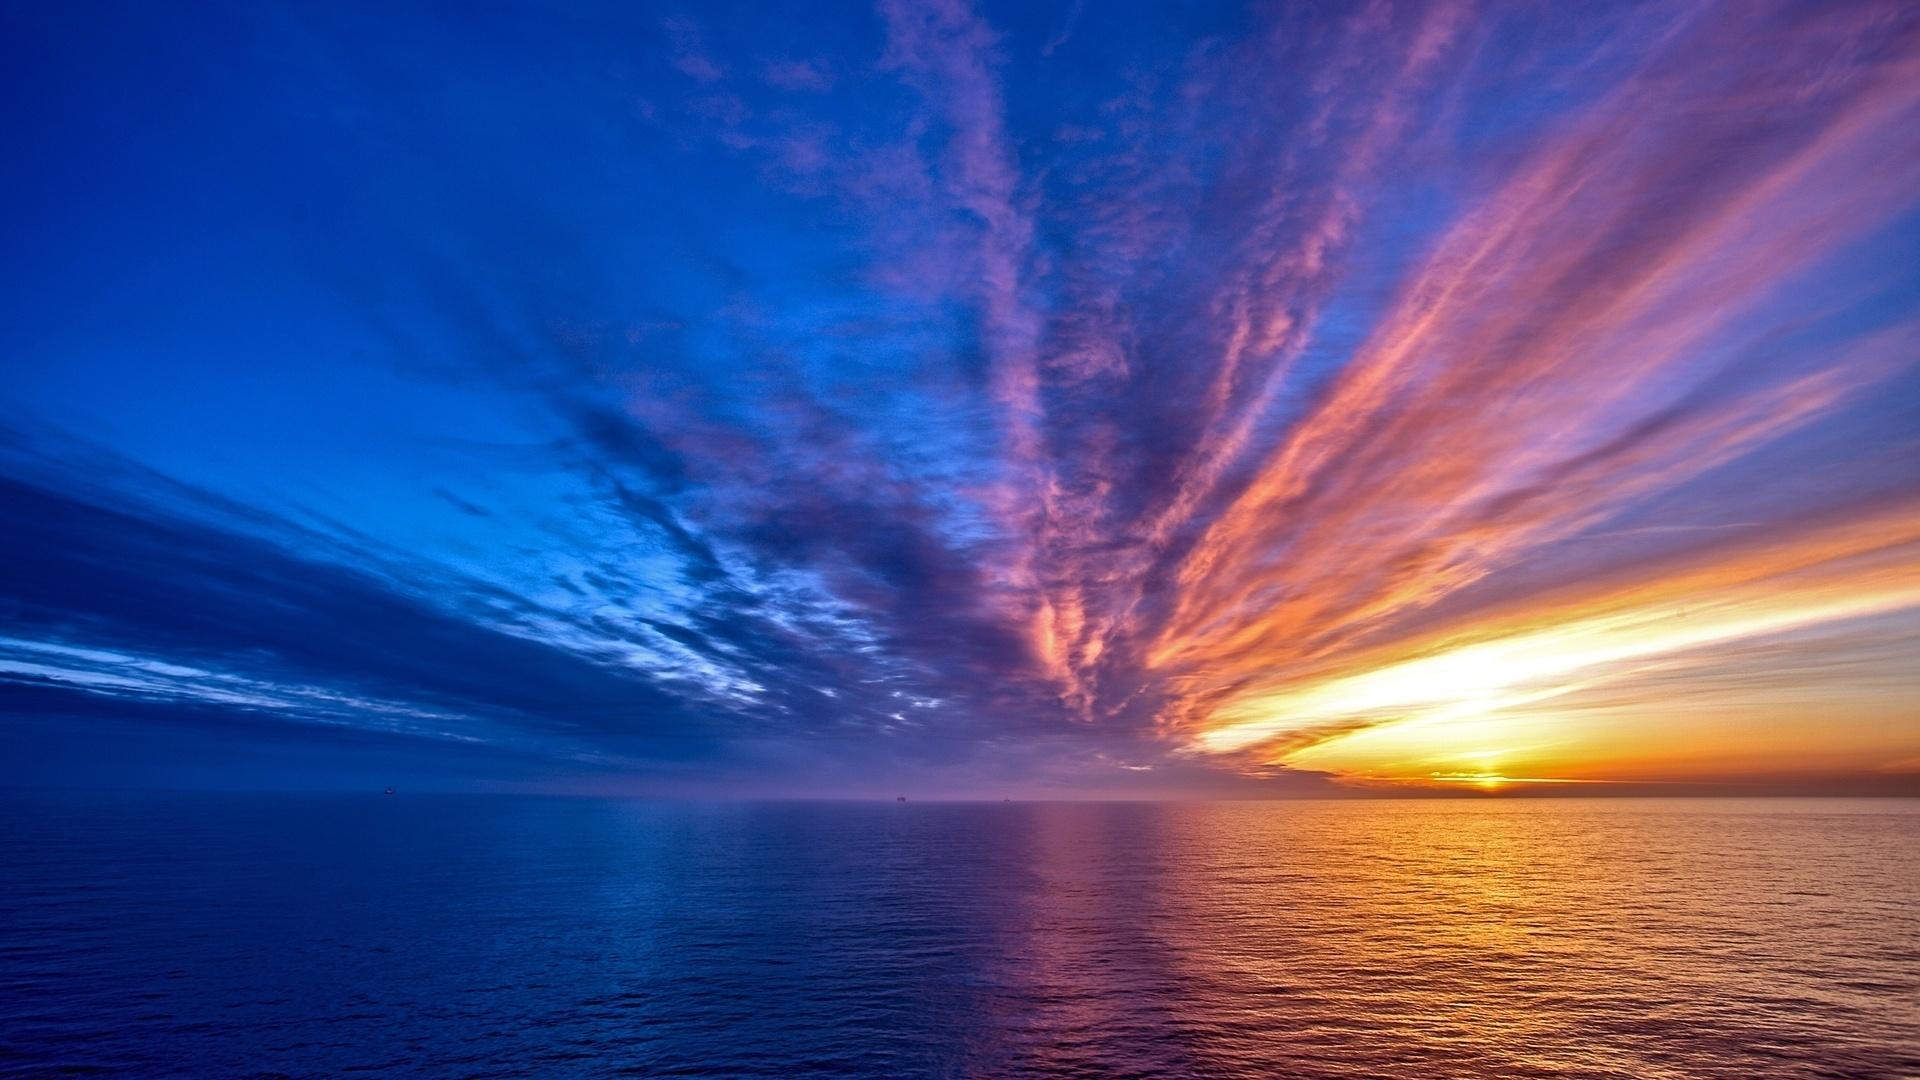 Wallpaper Sea sunset sky 1920x1080 Full HD 2K Picture, Image